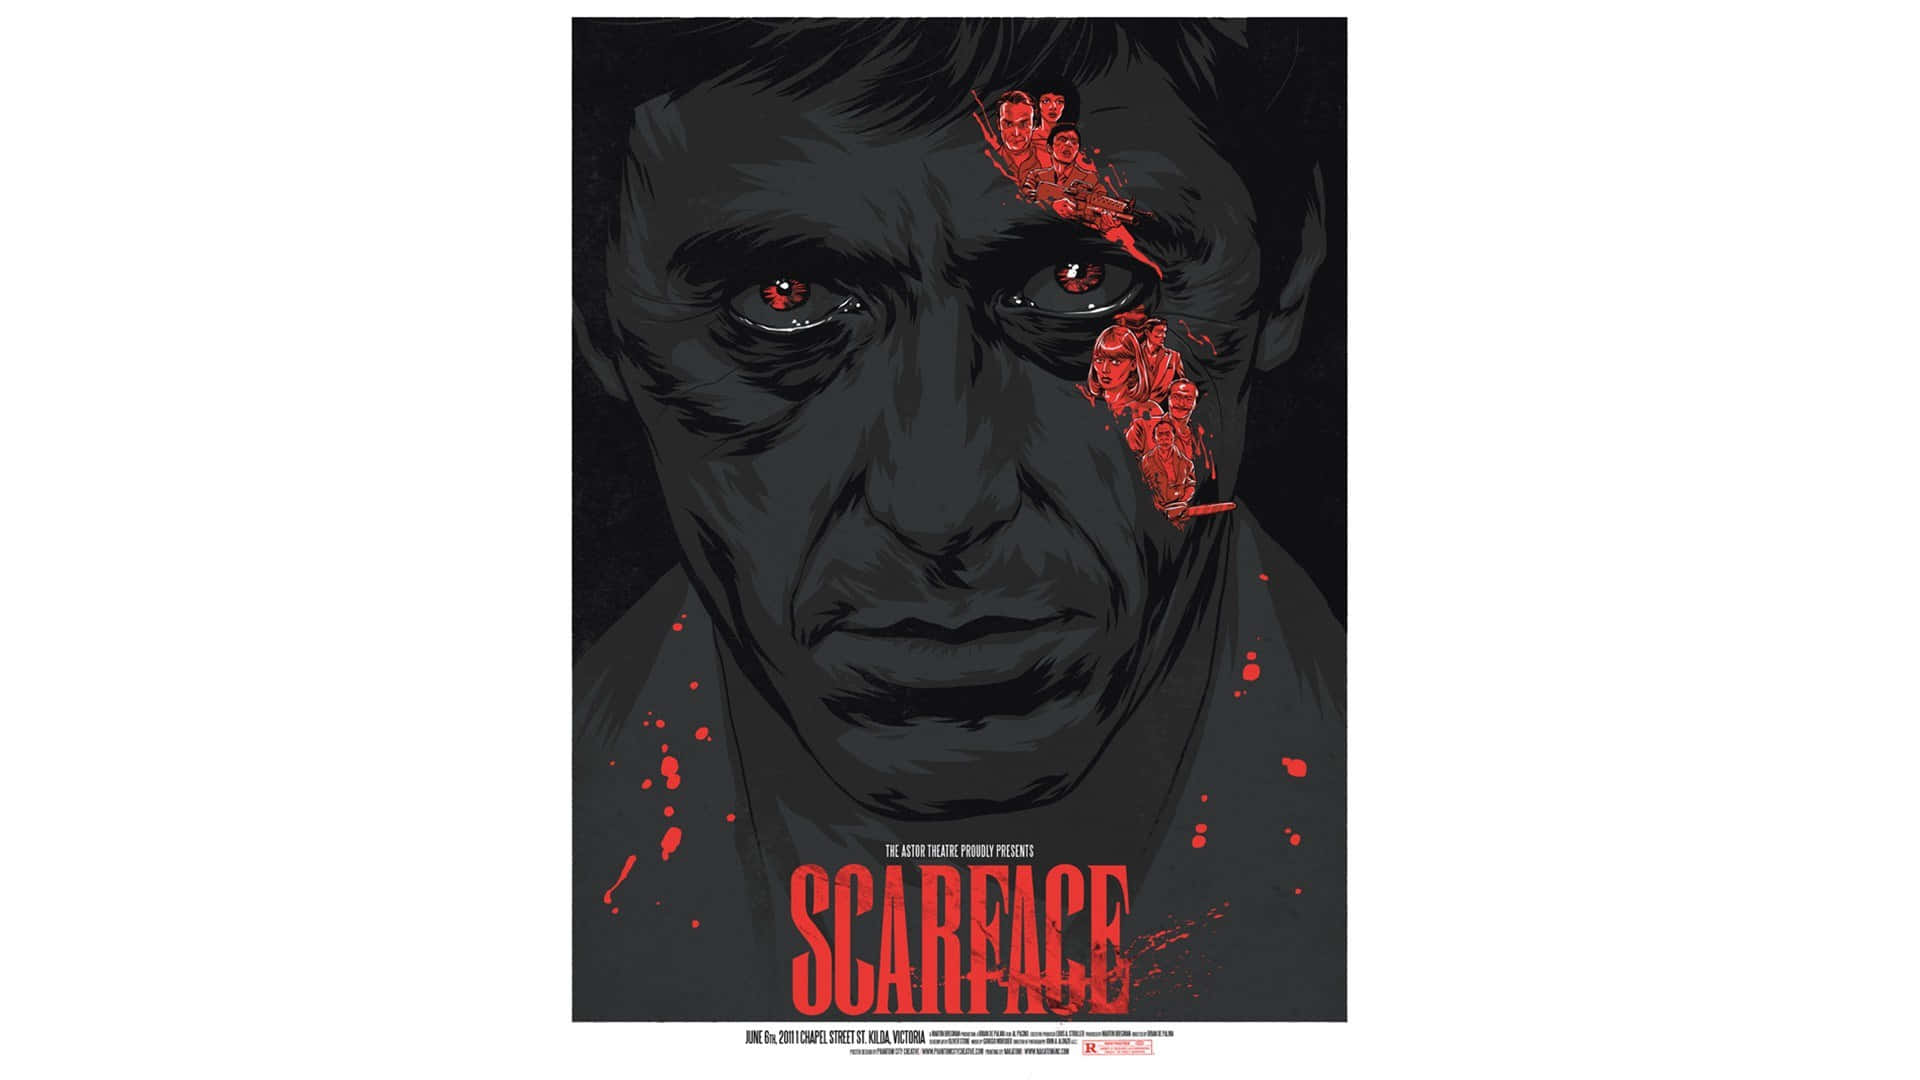 Scarface1920 X 1080 Bakgrund